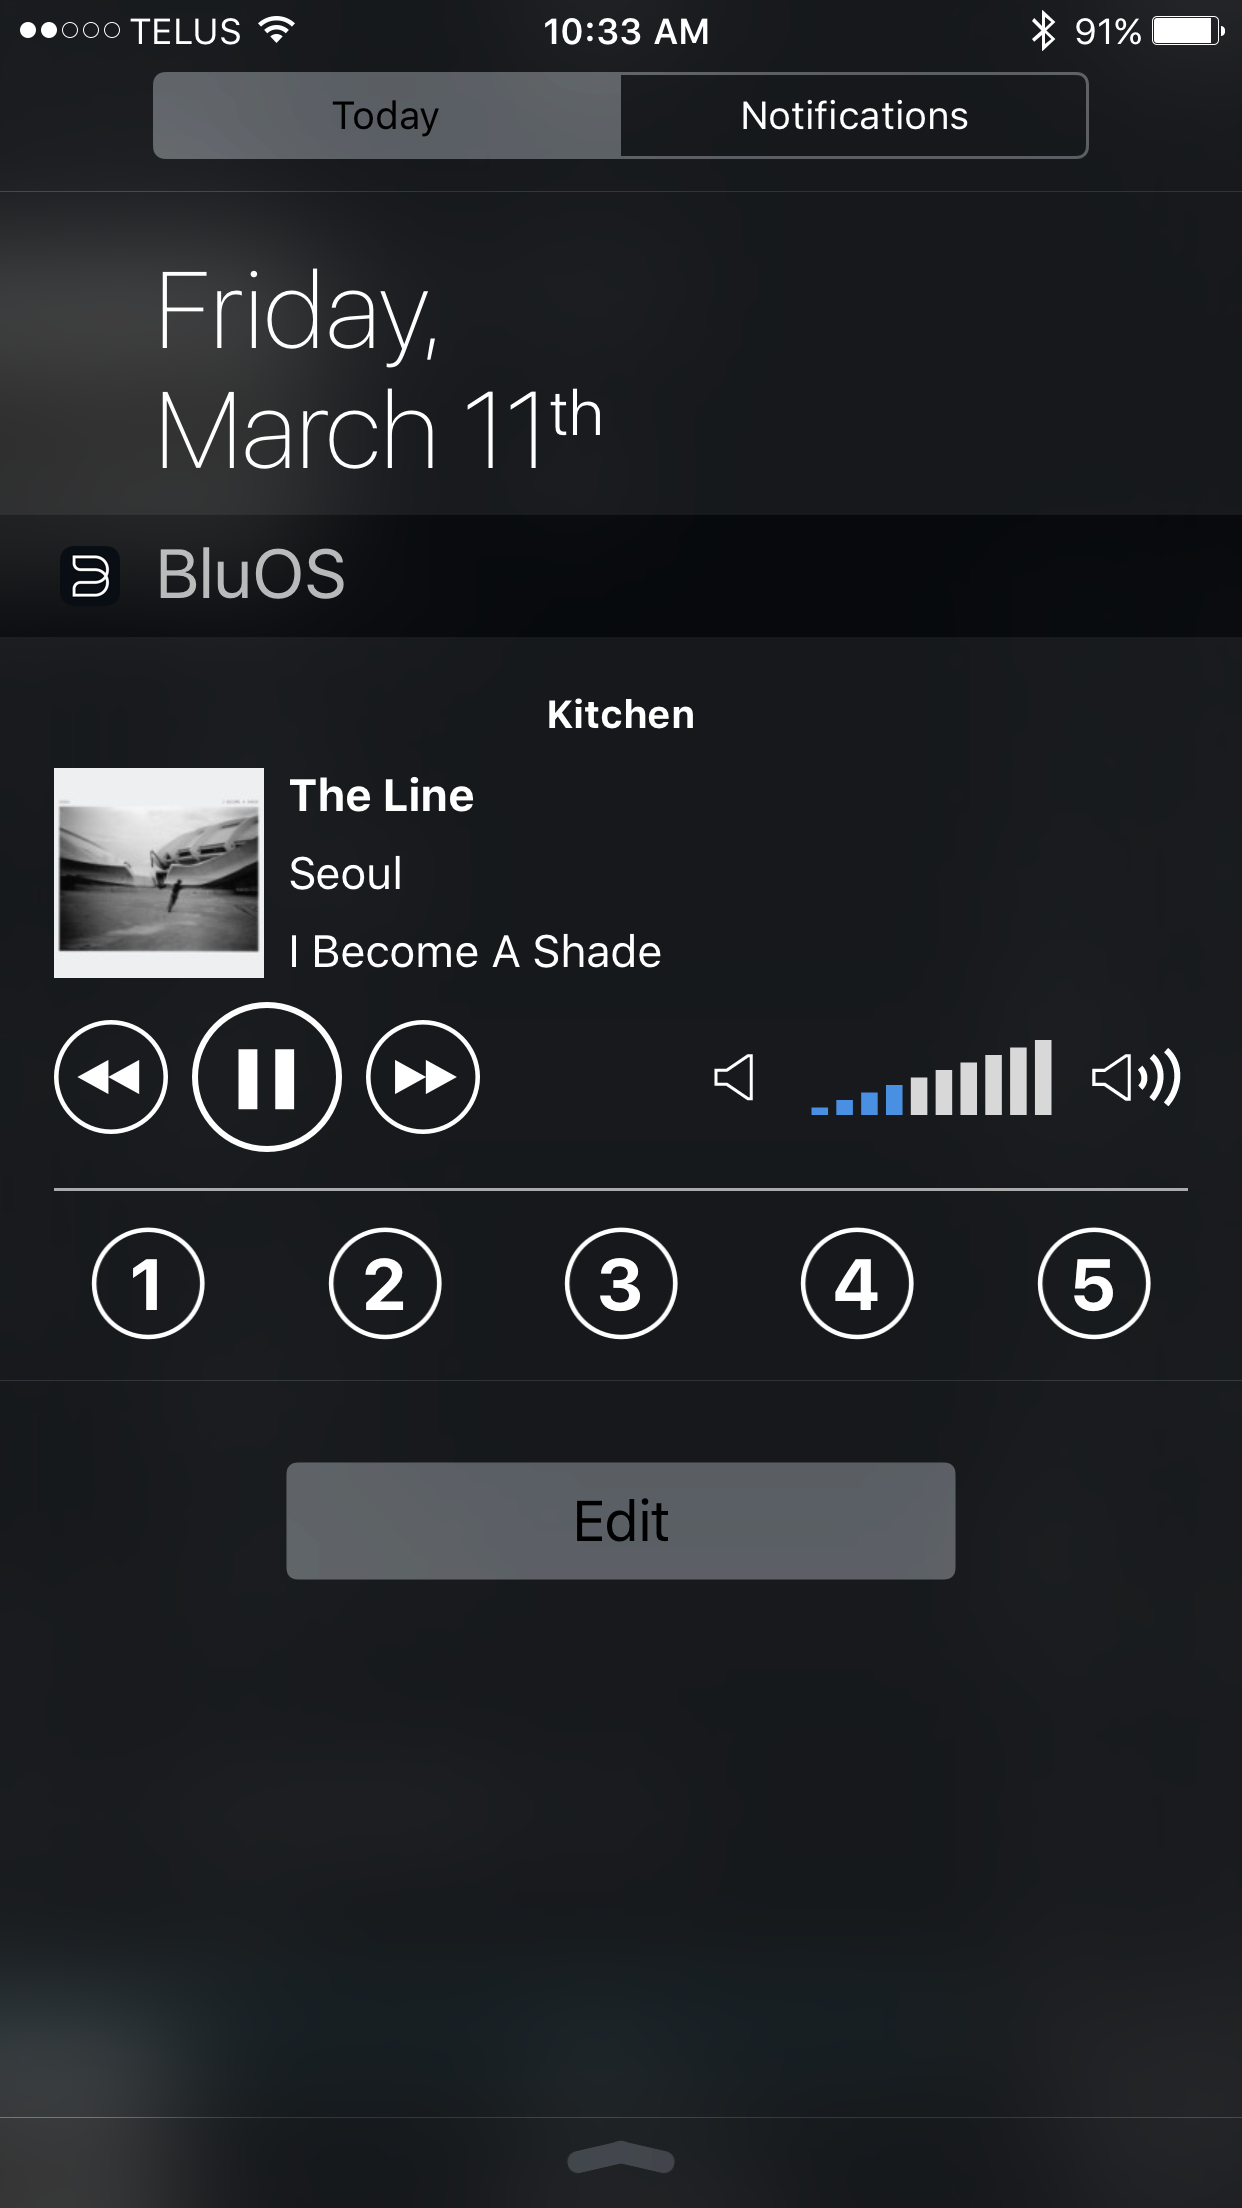 bluesound app for windows